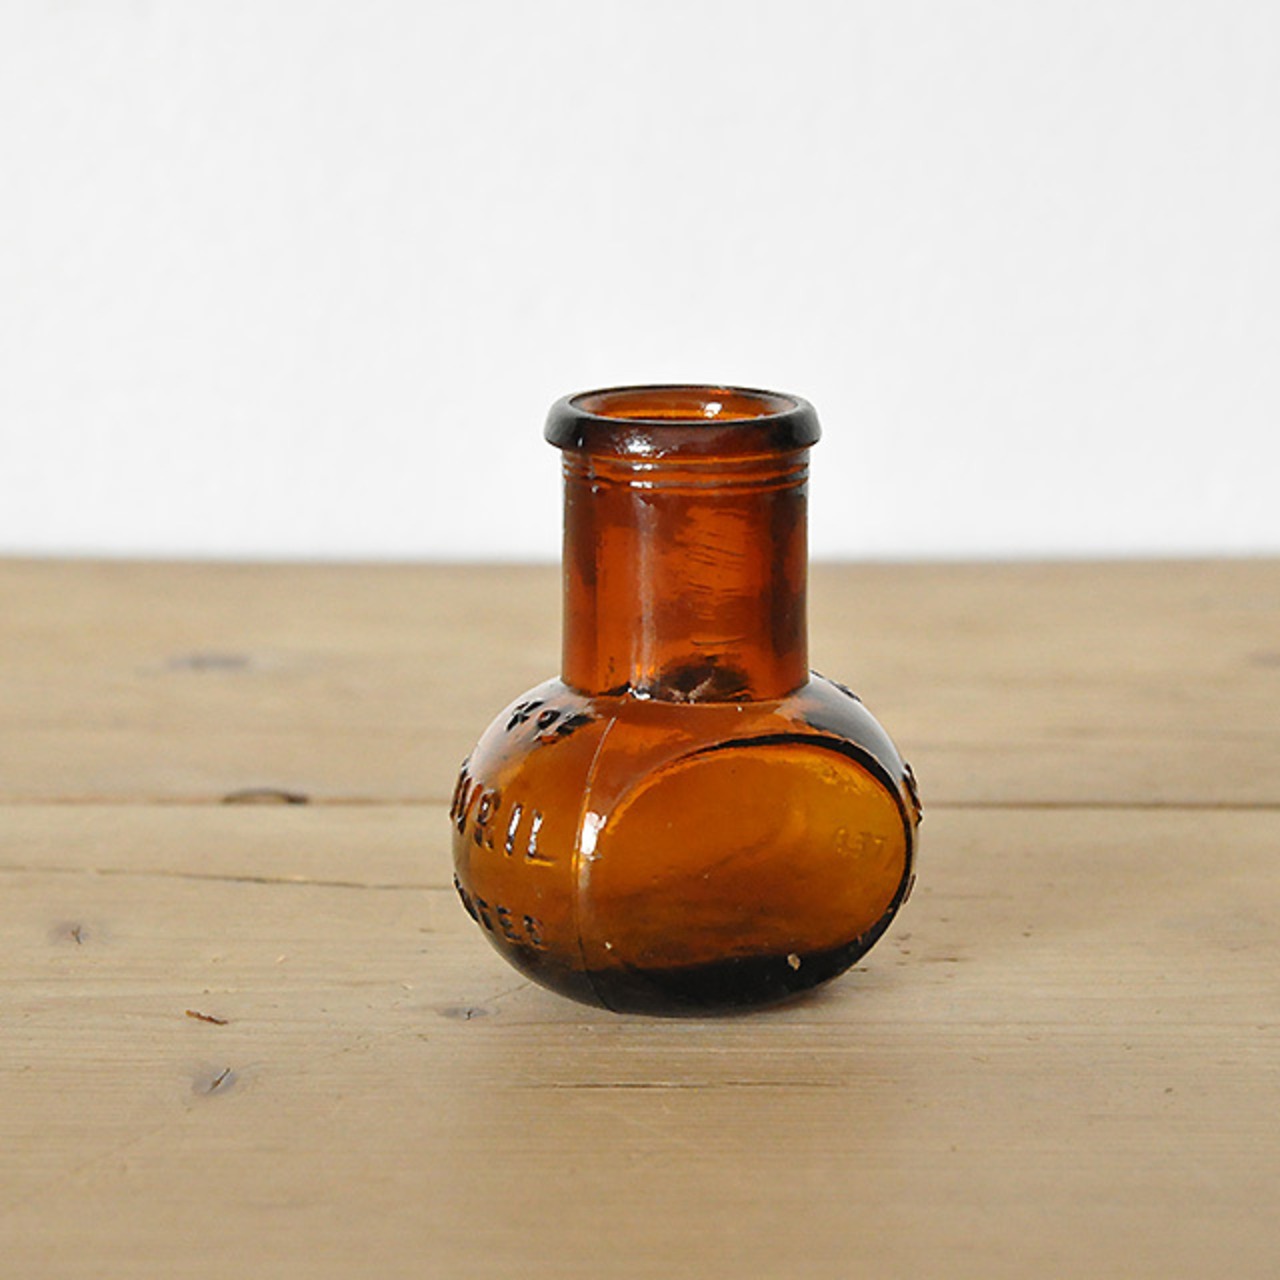 Amber Glass Bottle S【B】 / アンバー ガラス ボトル / 1911-0171-6B